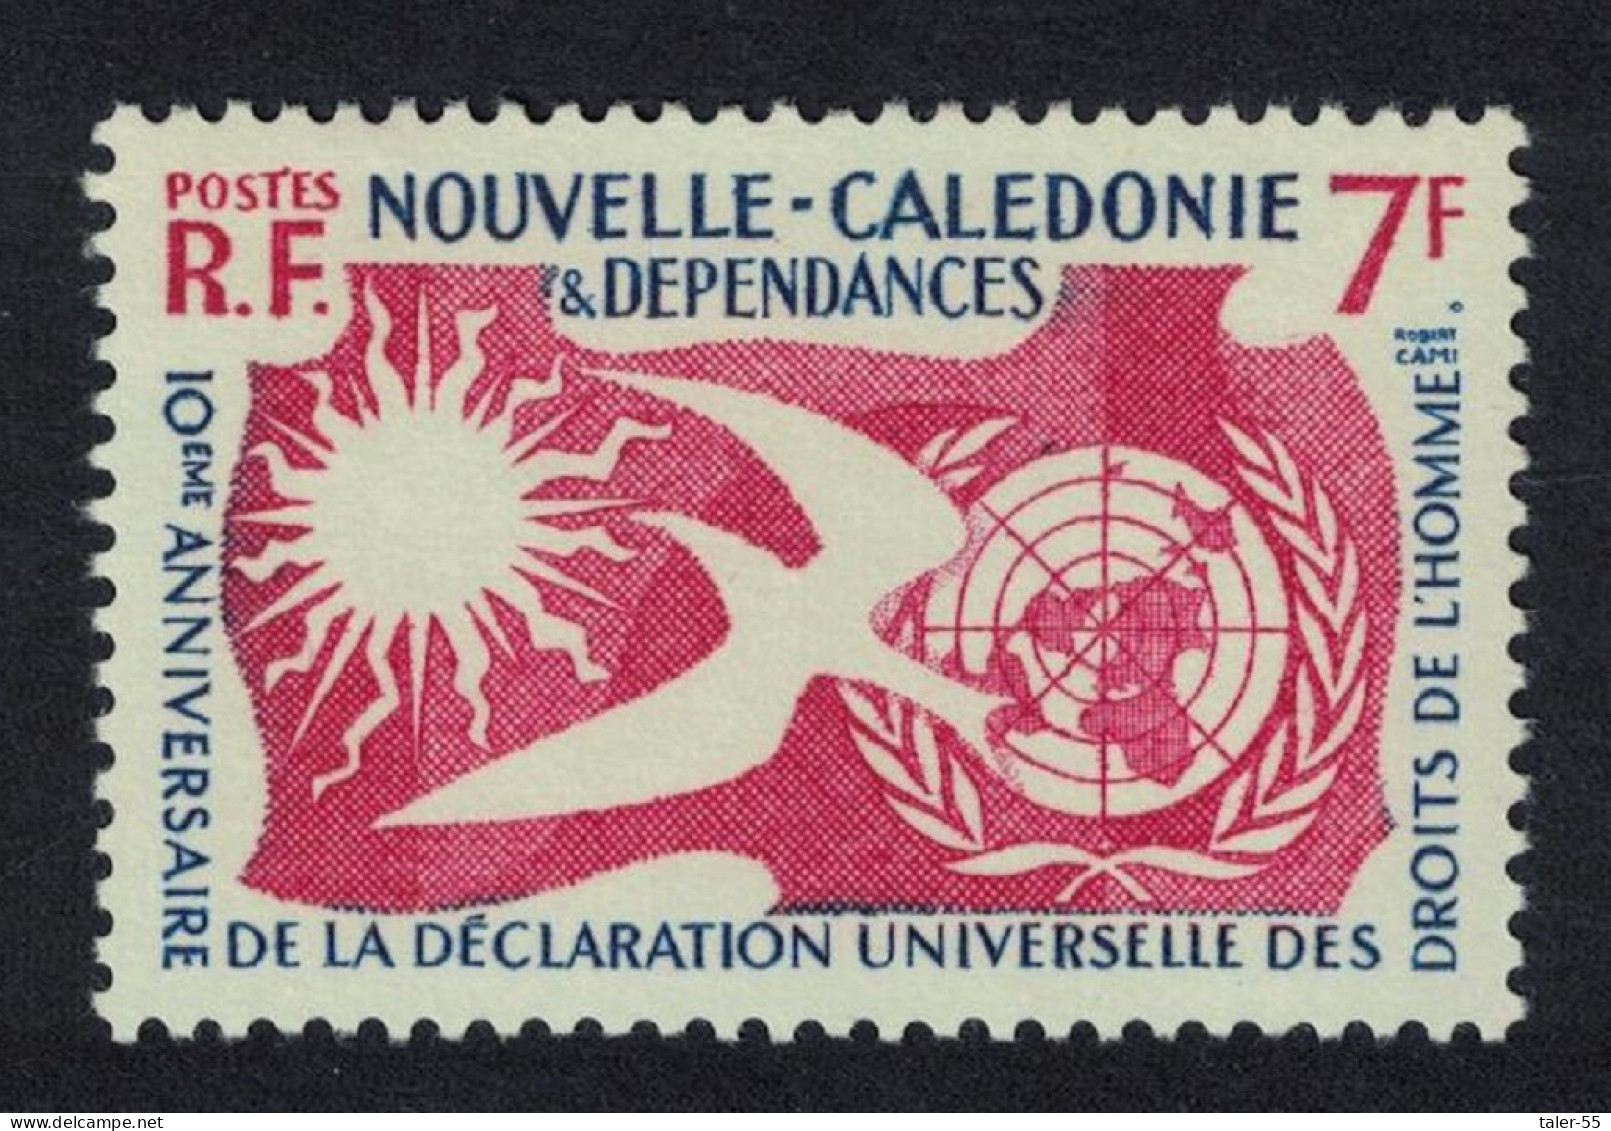 New Caledonia Tenth Anniversary Of Declaration Of Human Rights 1958 MNH SG#343 - Ongebruikt